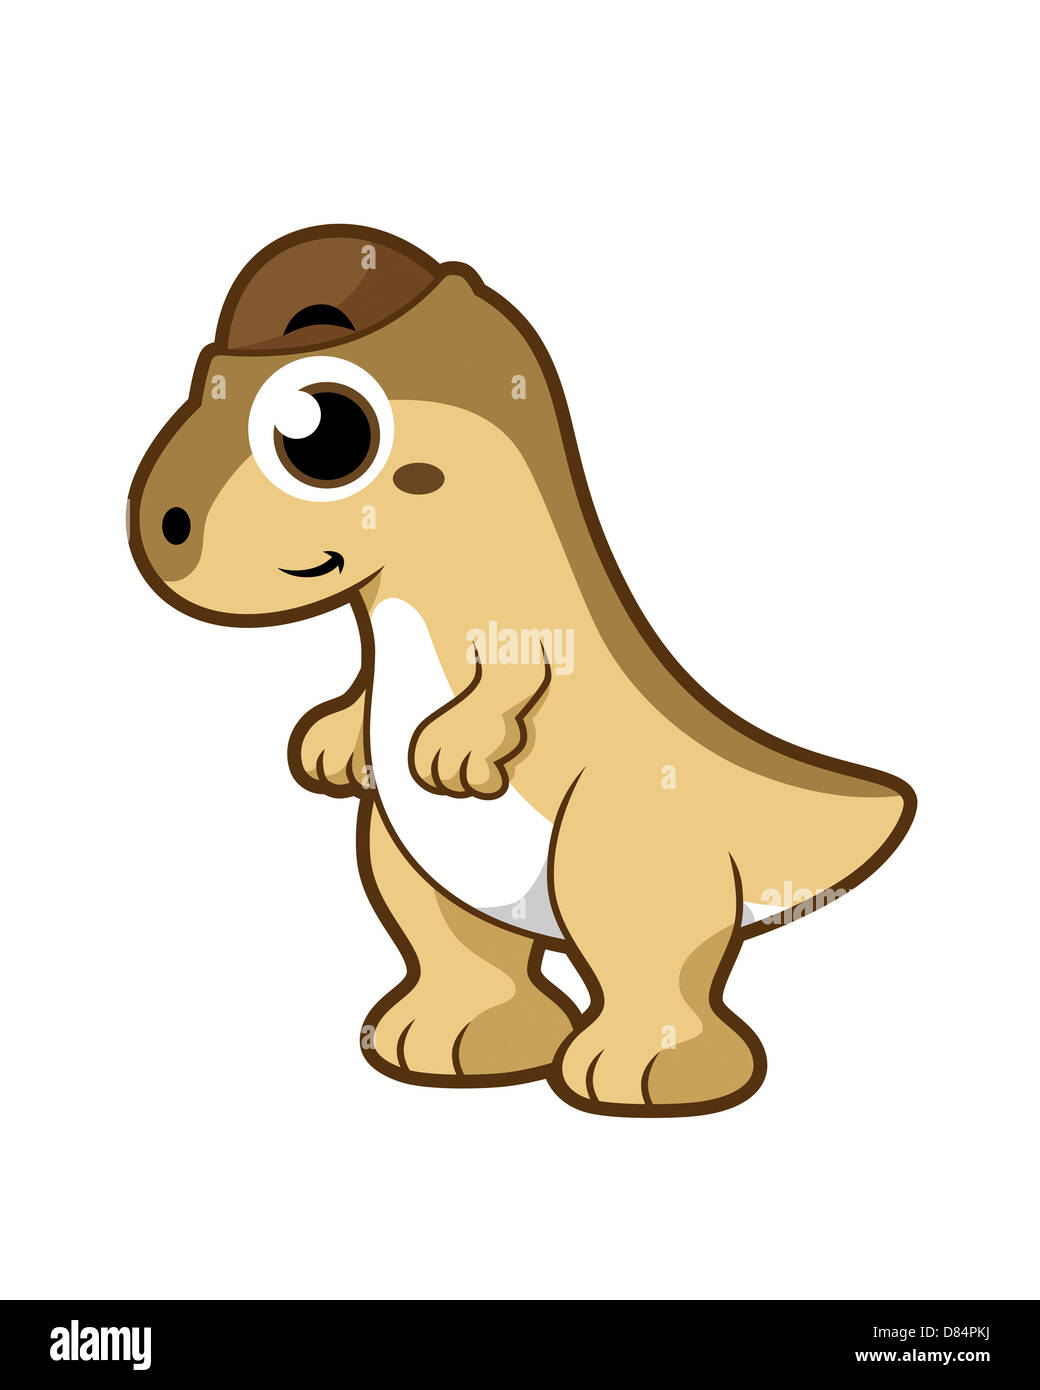 Cute illustration of a Pachycephalosaurus dinosaur. Stock Photo